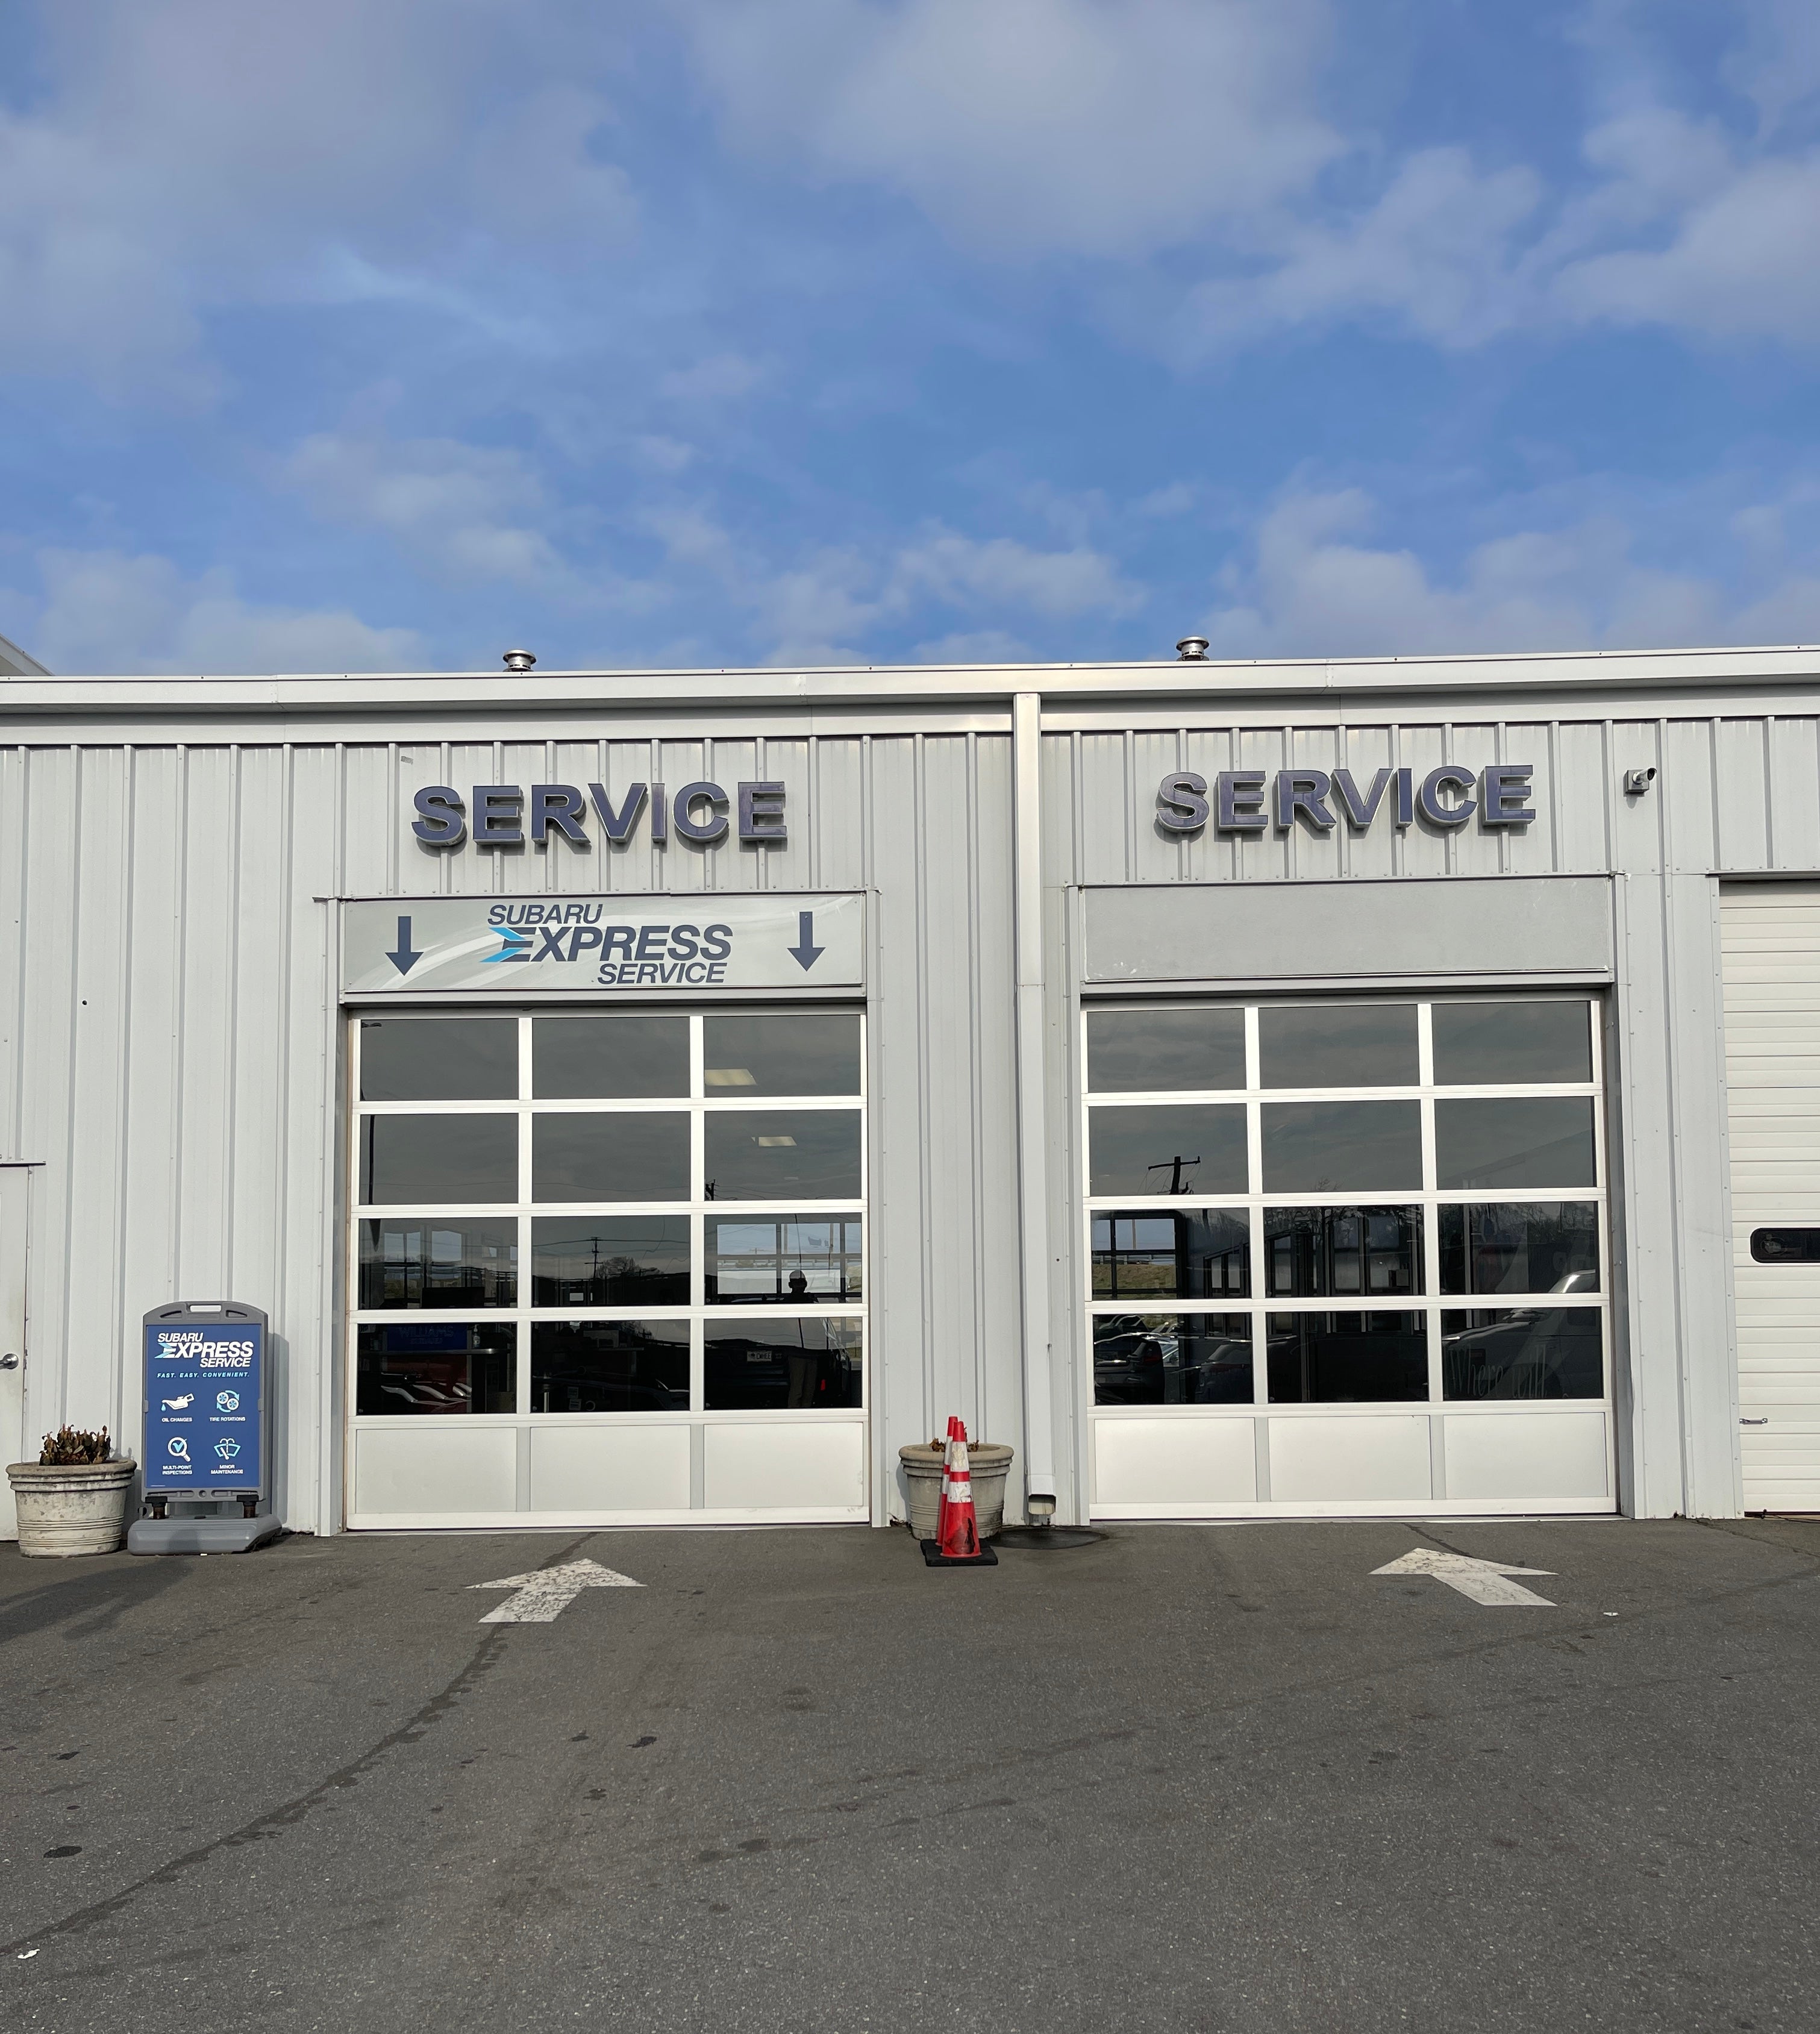 Subaru Service Garage Image